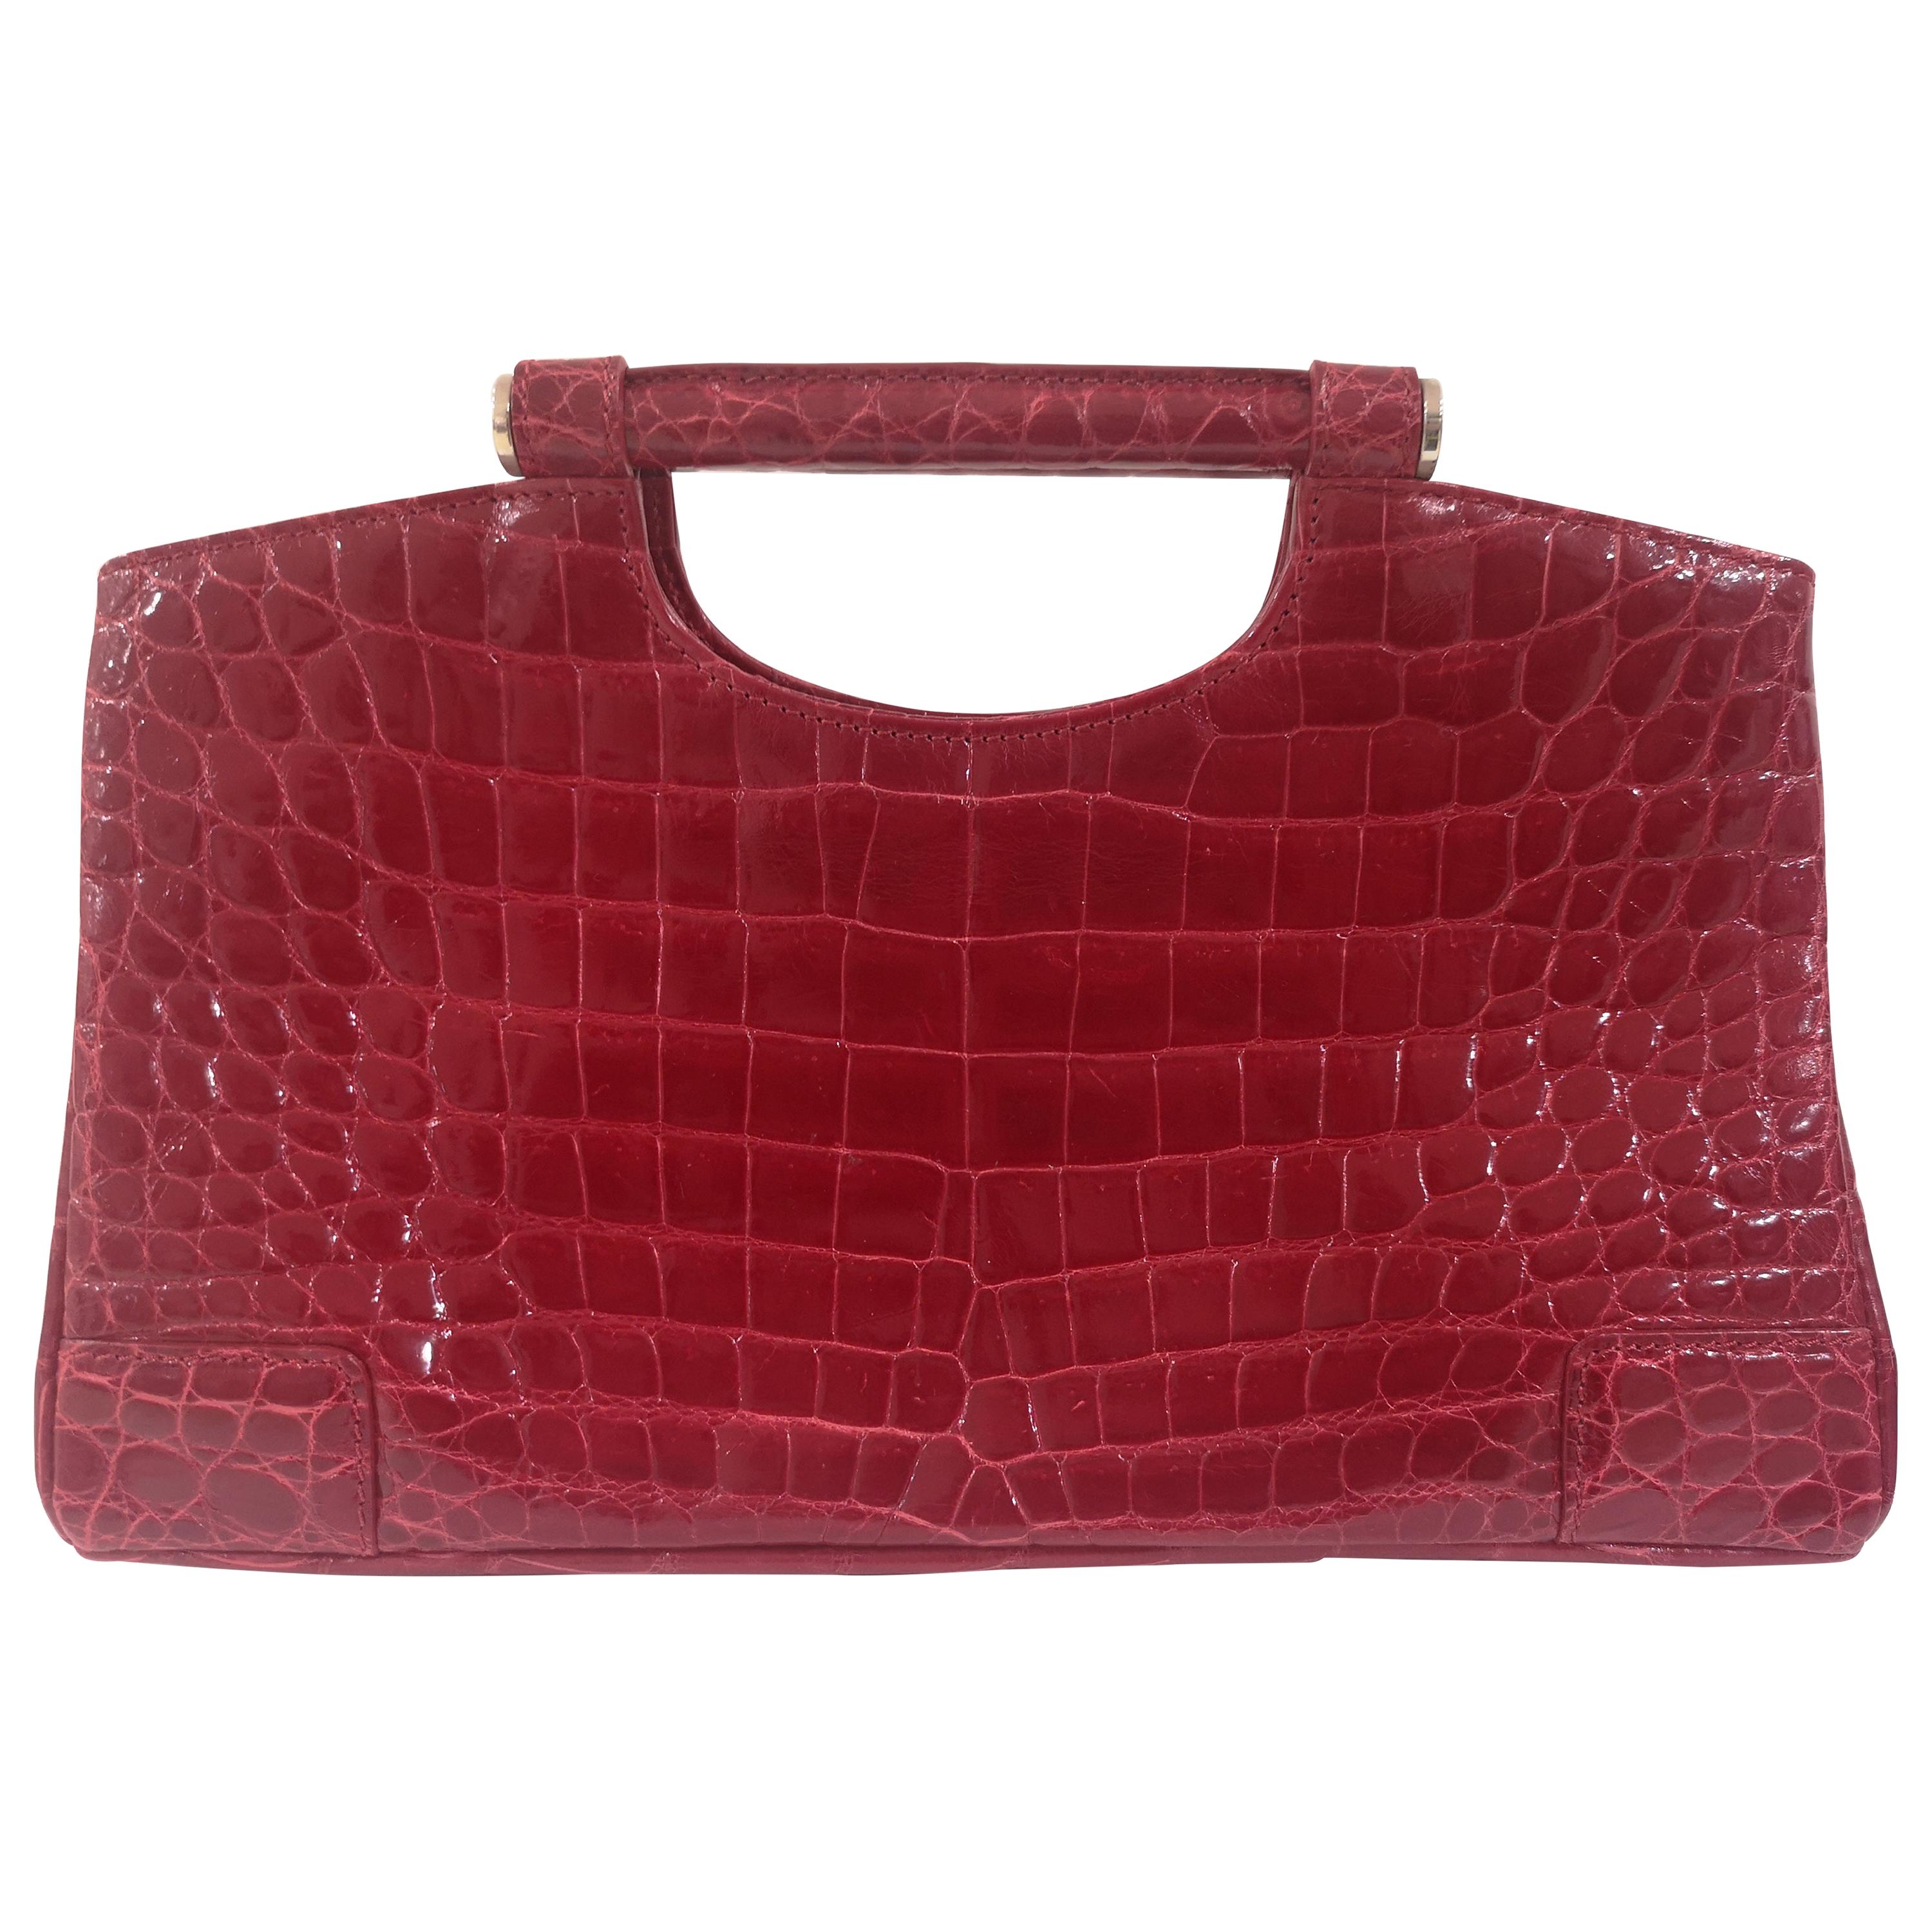 1970s Colombo Red crocodile handbag